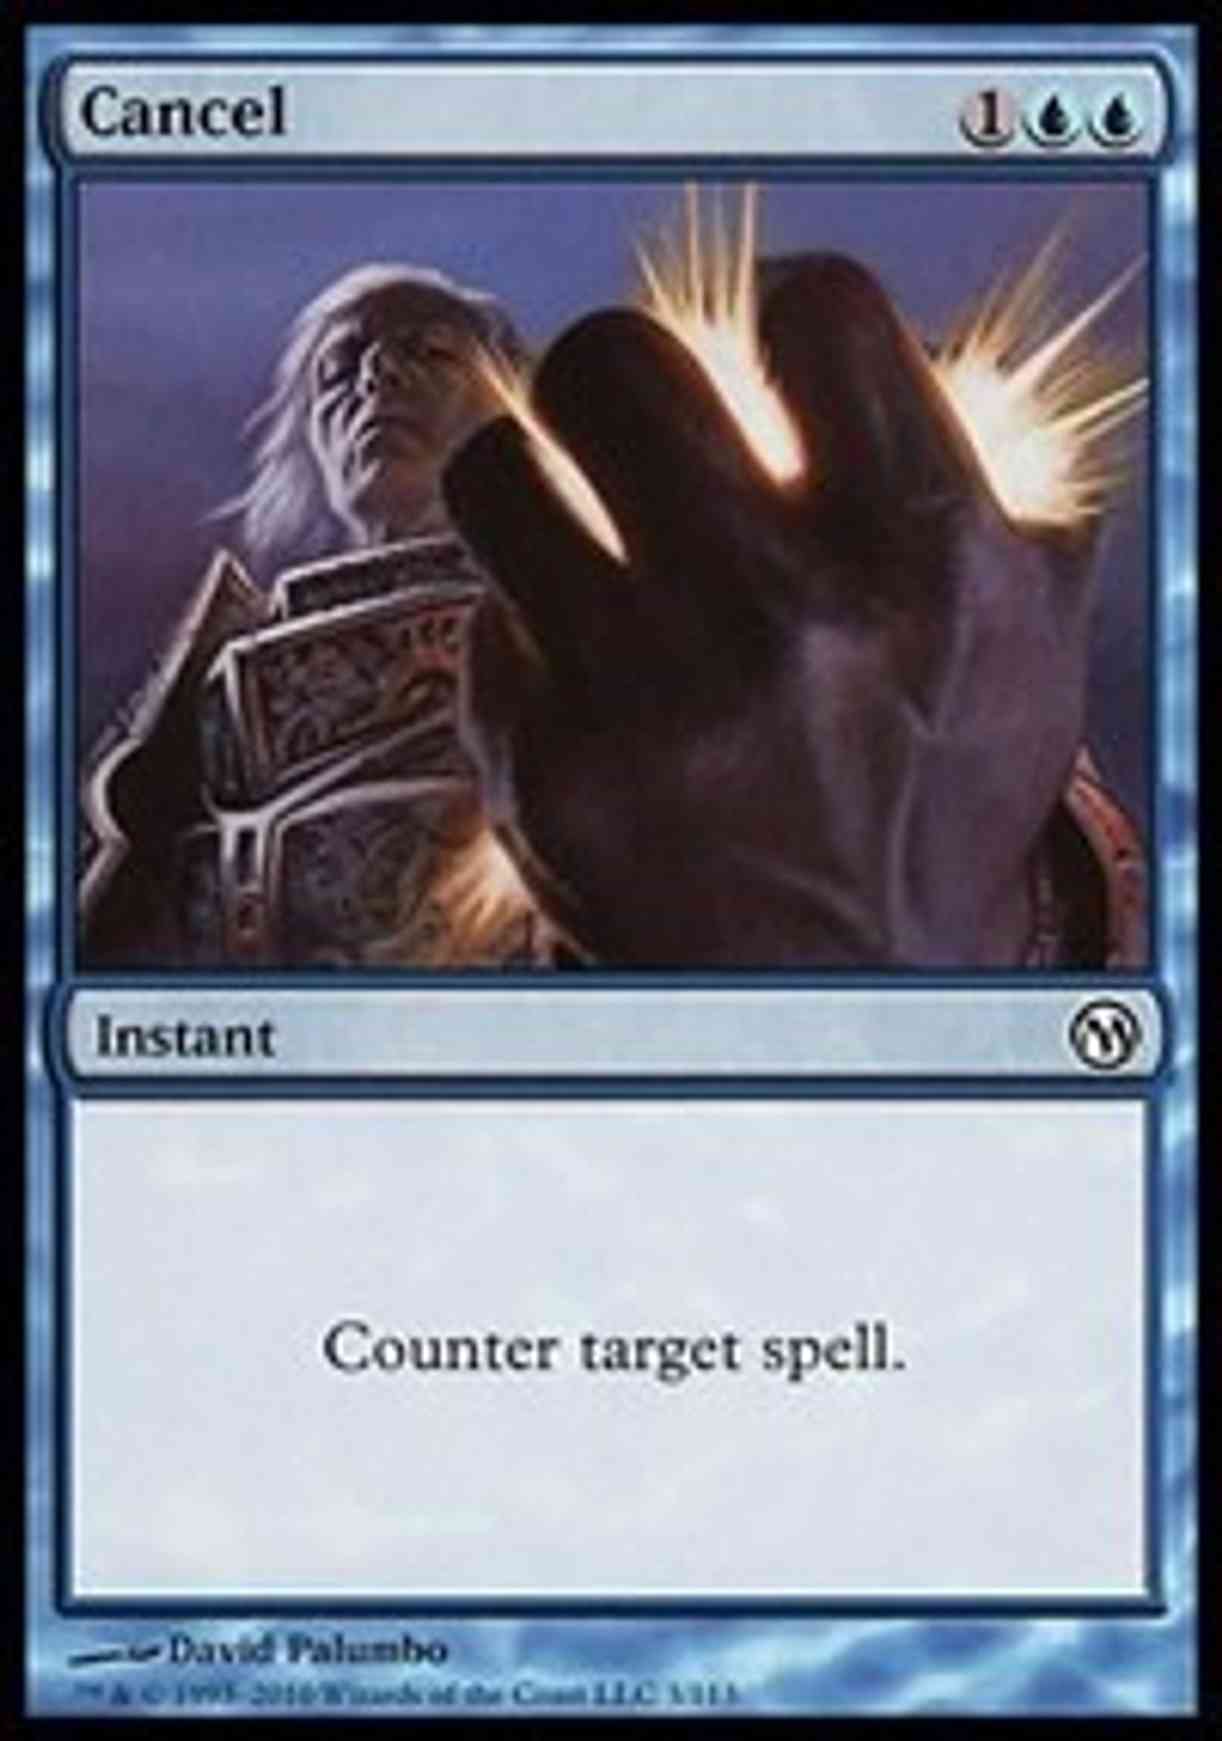 Cancel magic card front